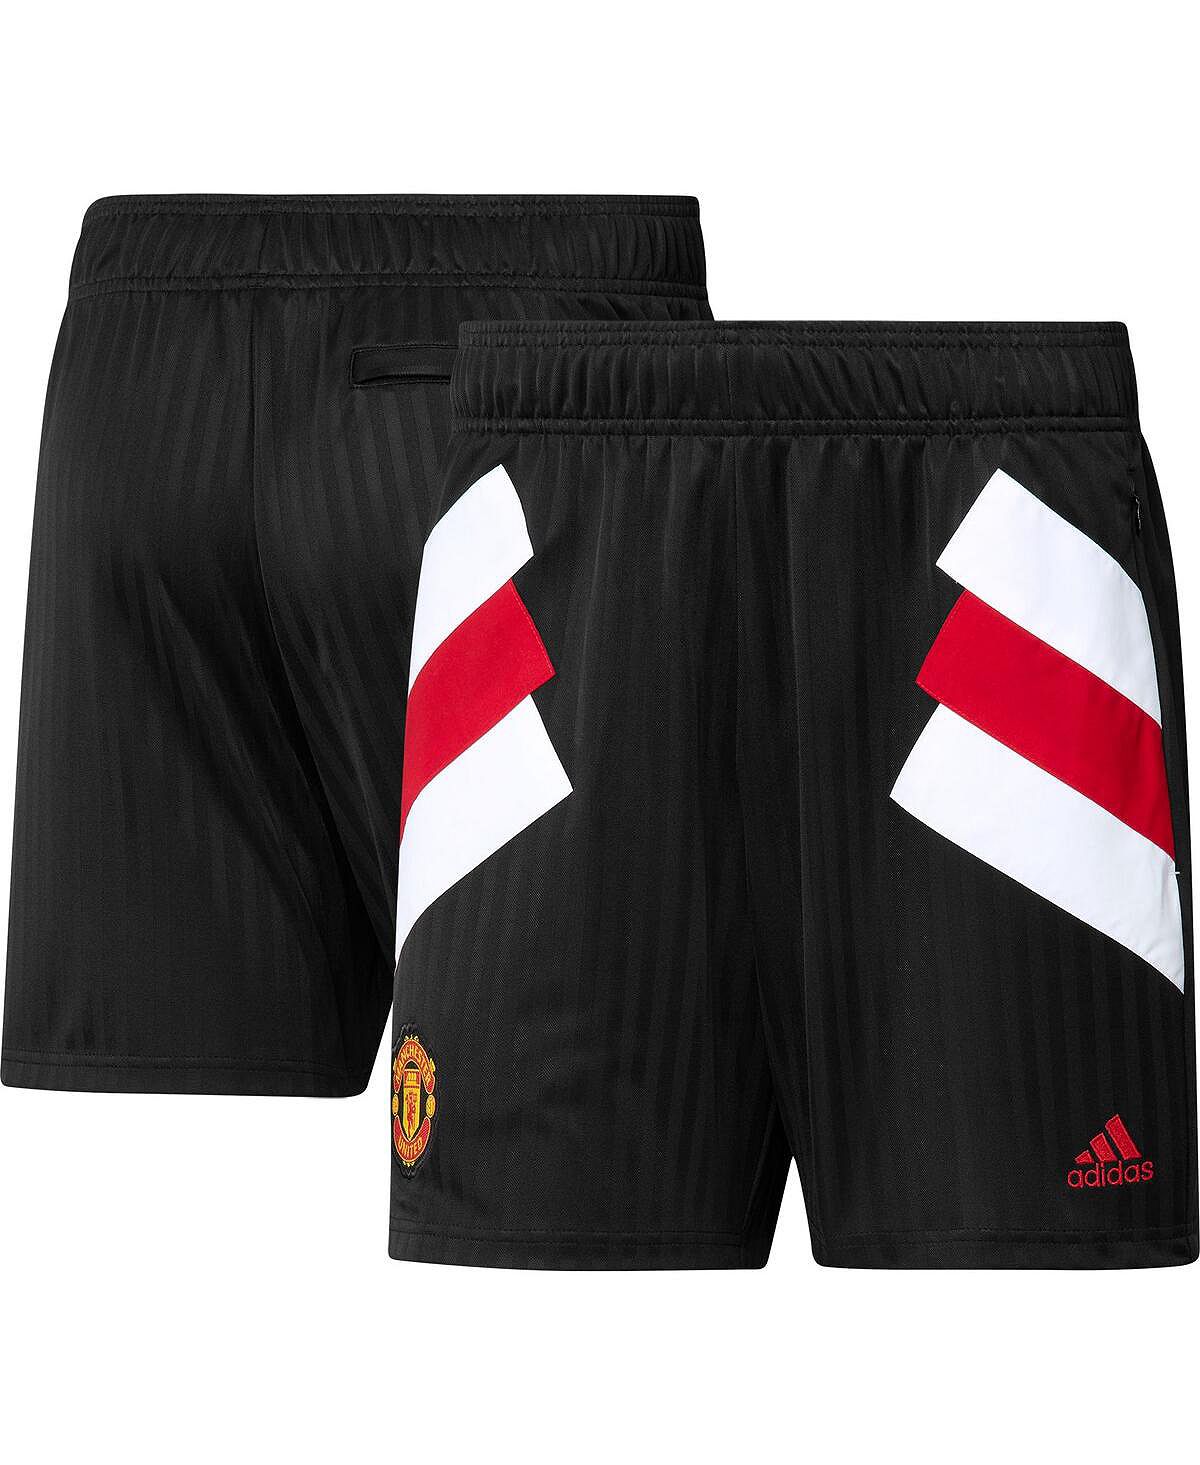 Мужские черные шорты Manchester United Football Icon adidas 2021 2022 new manchester football jersey top quality fast send united aldult kids kit